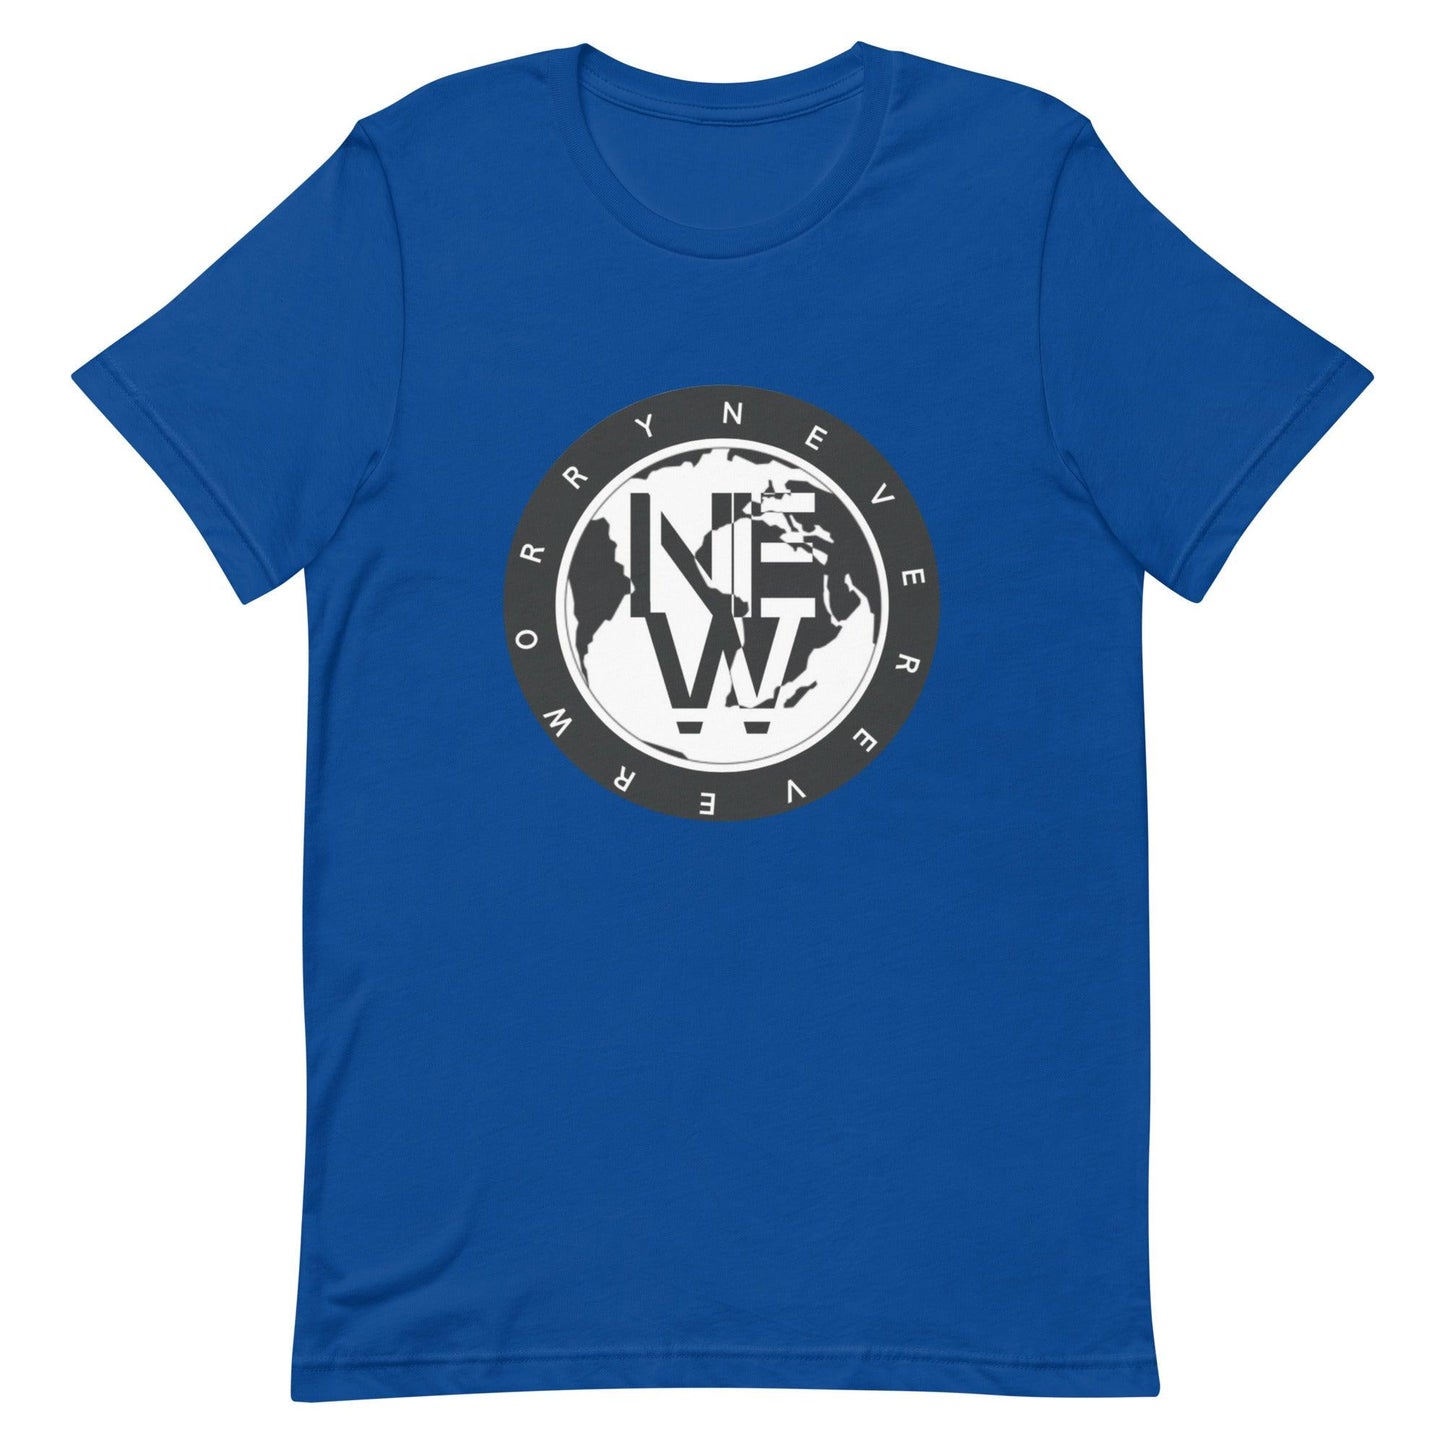 Jonathan Newsome "Never Worry" t-shirt - Fan Arch